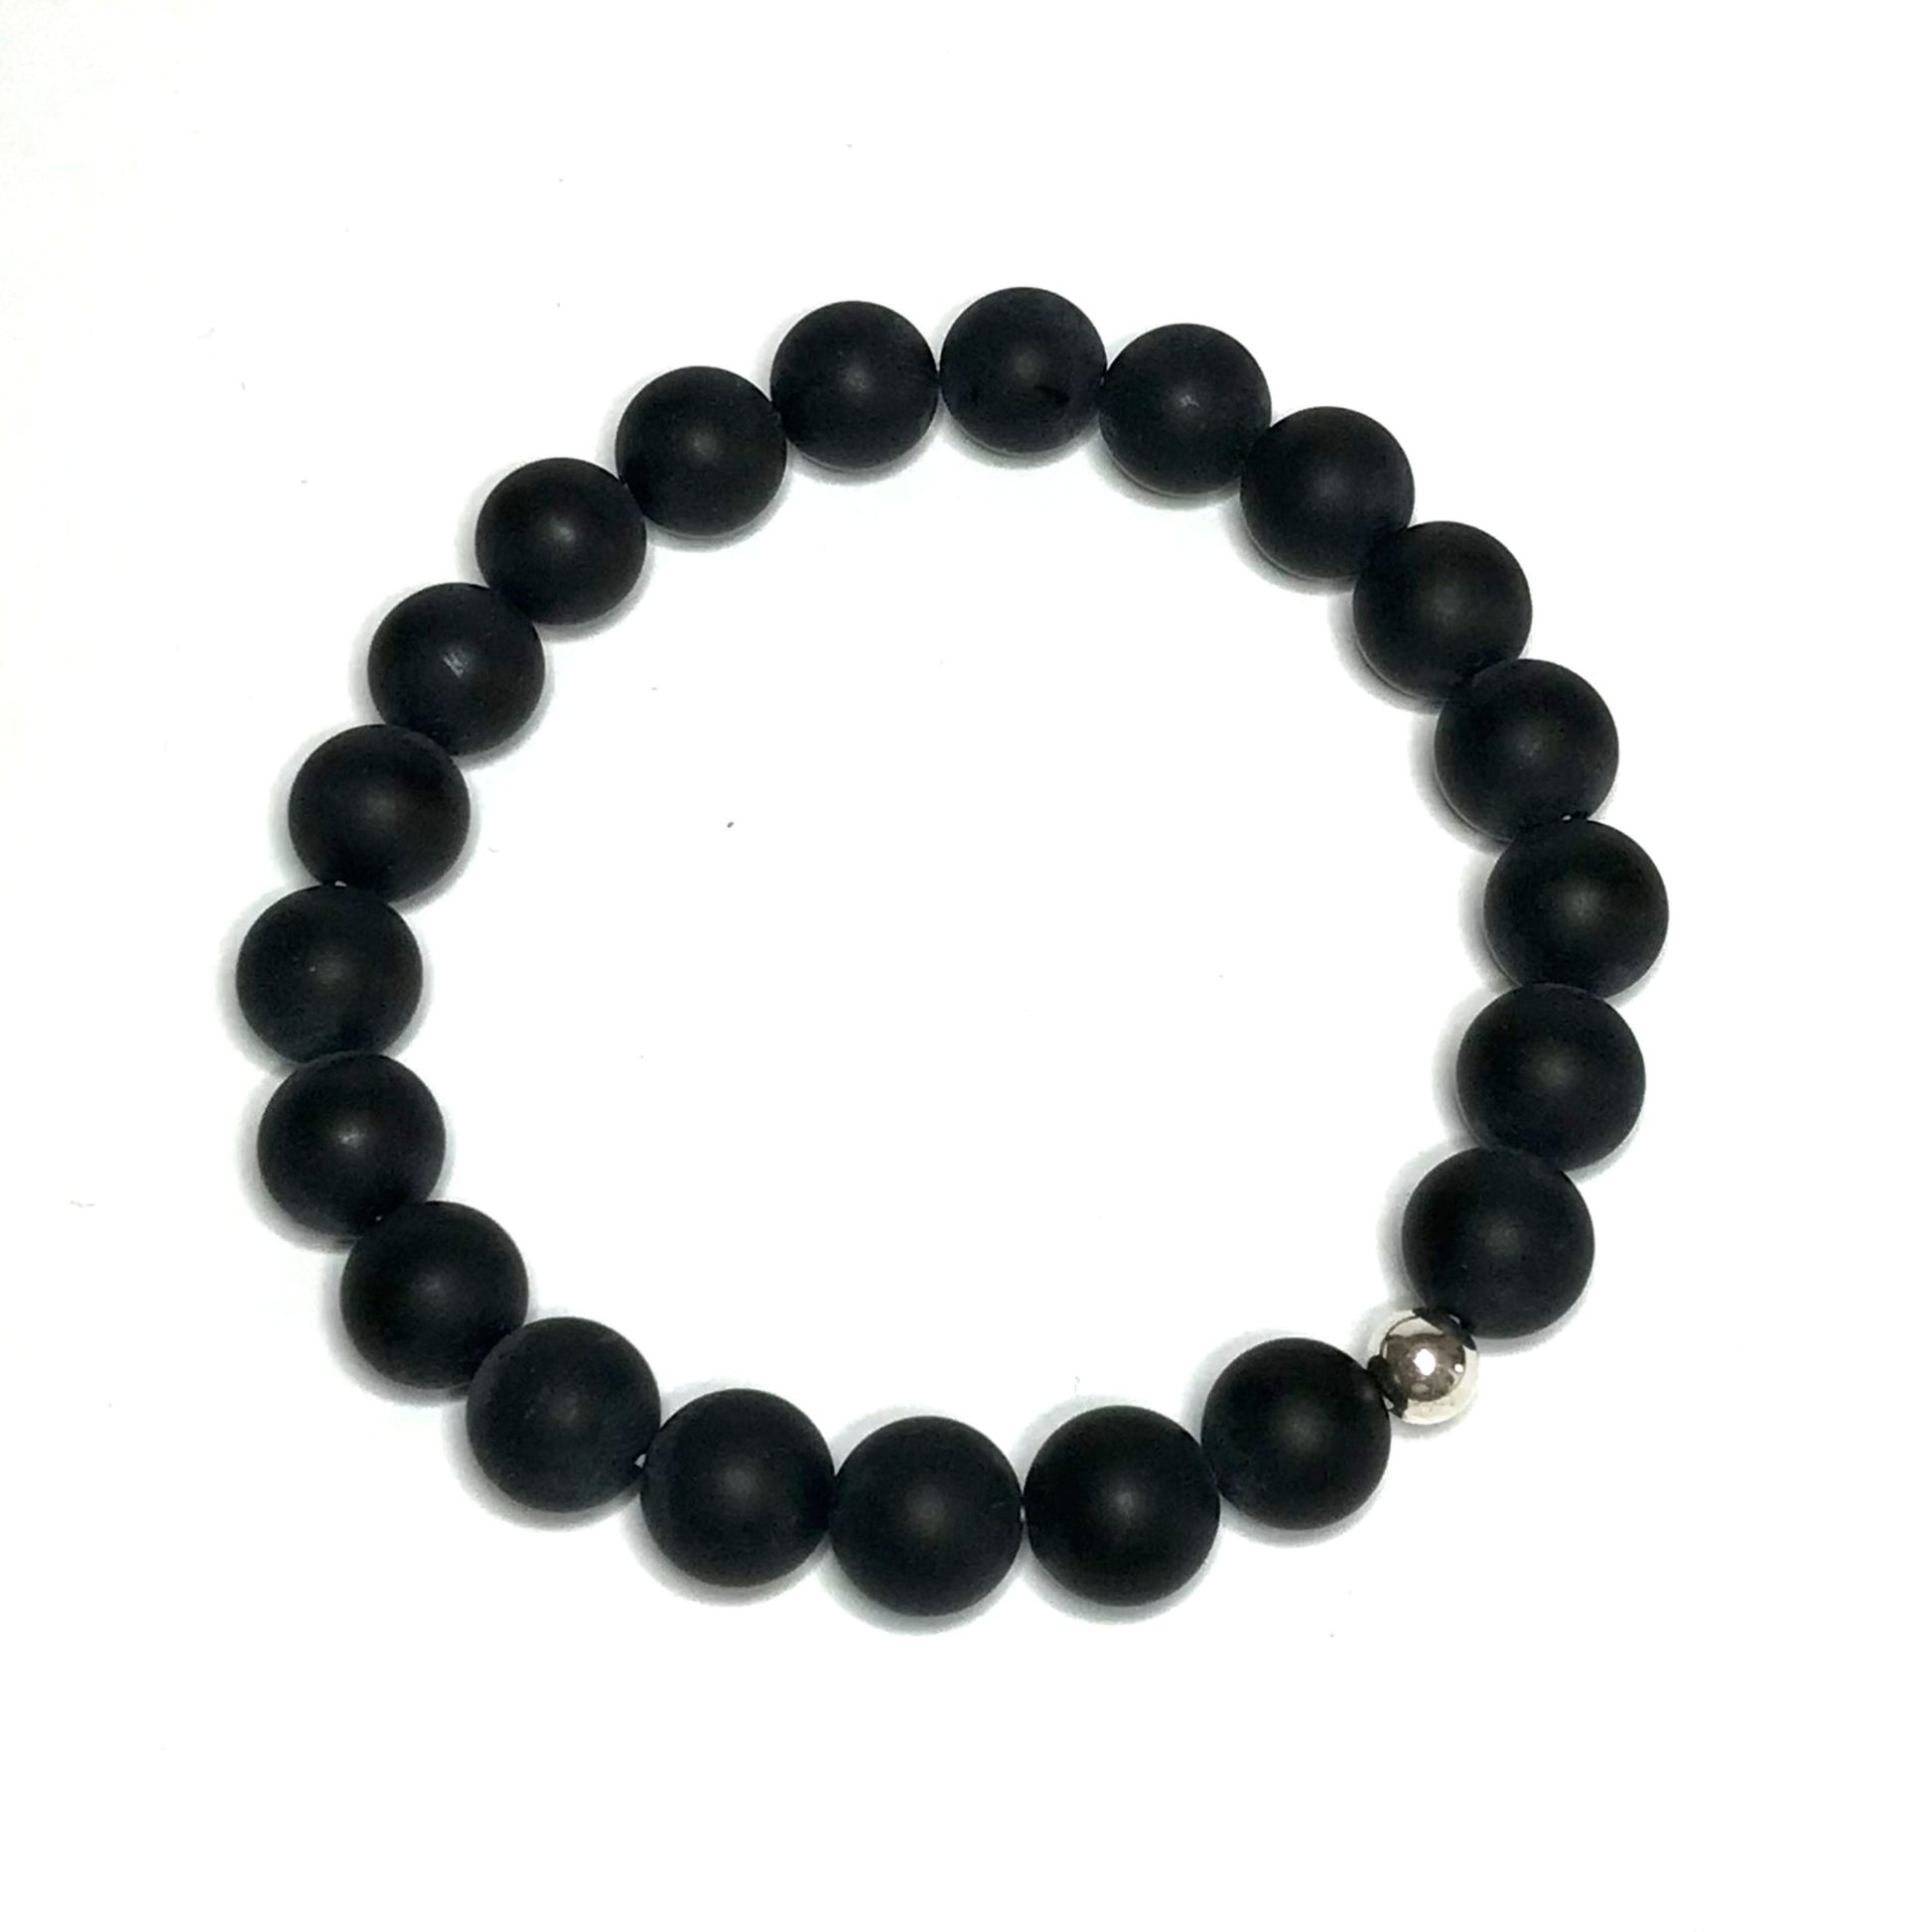 Handmade 10mm matte onyx bracelet on white background from above